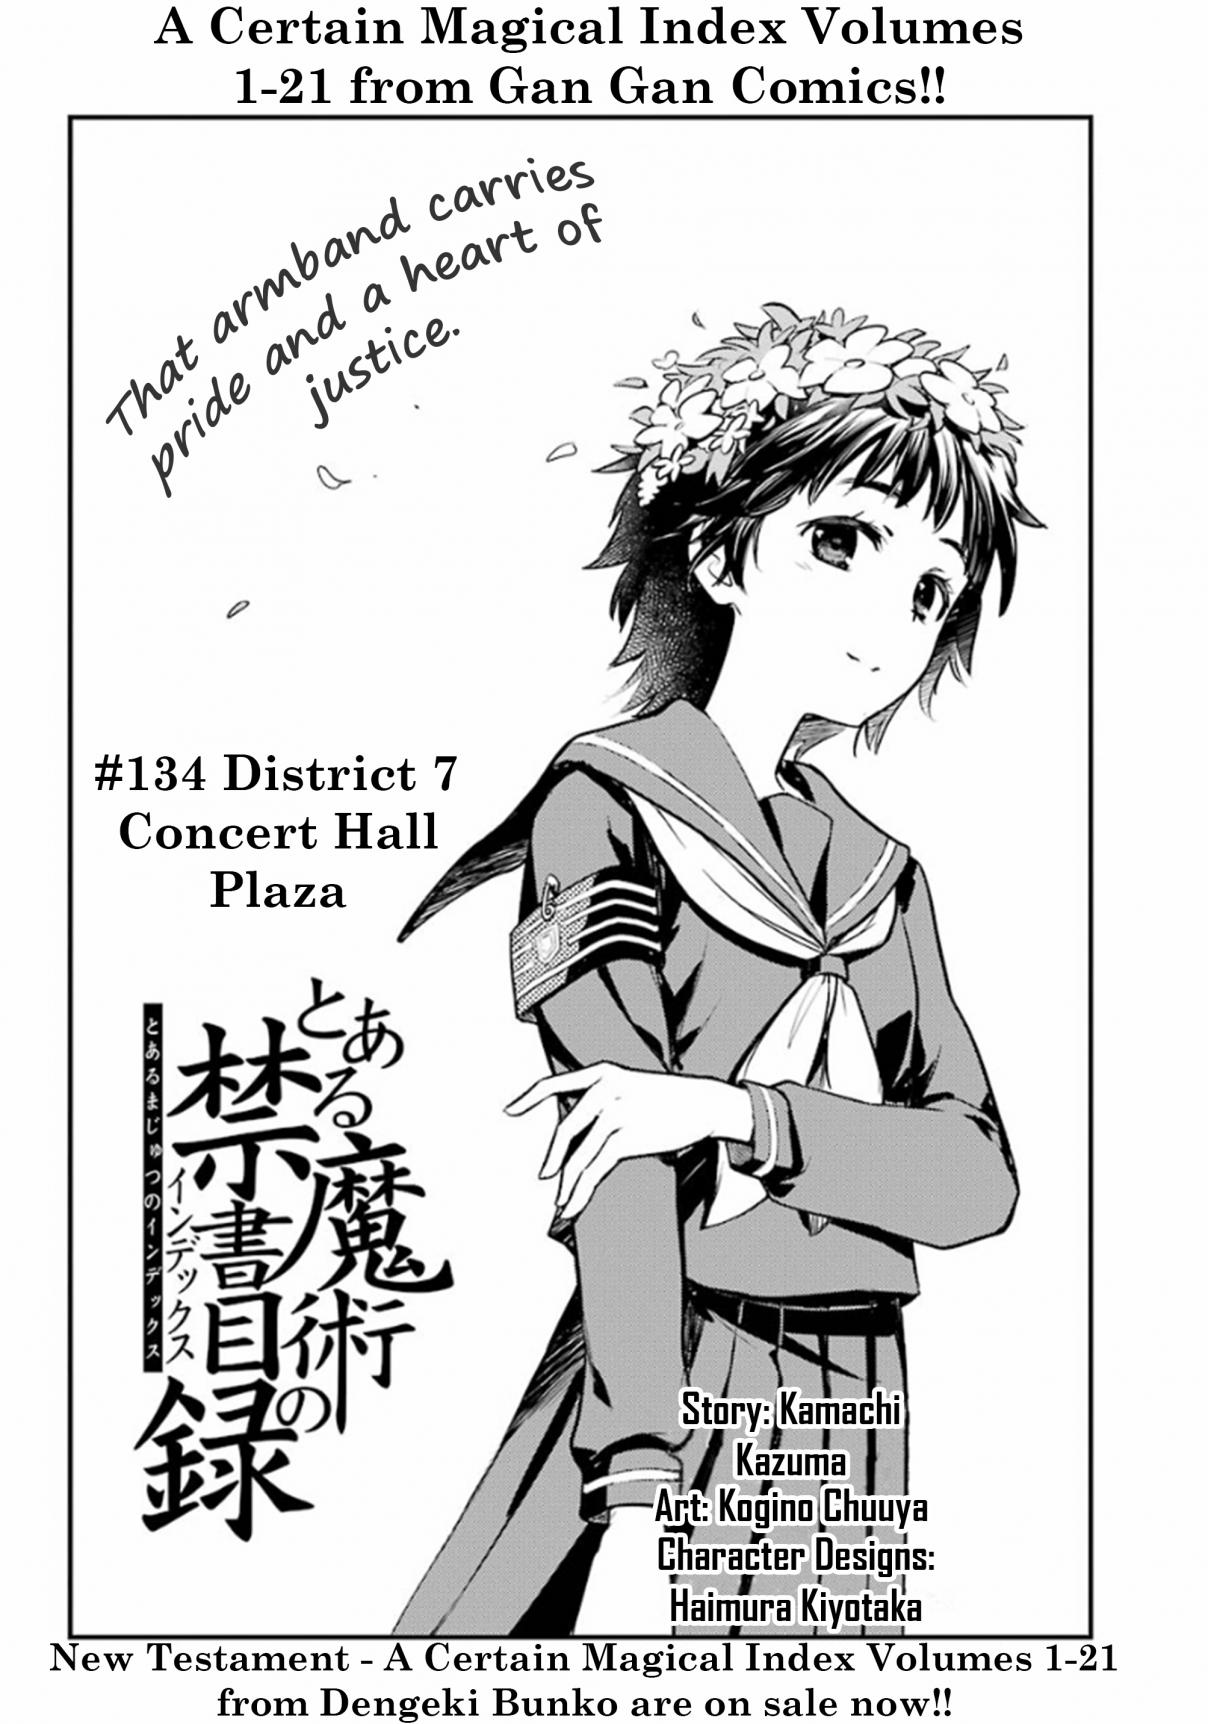 Toaru Majutsu no Index Vol. 22 Ch. 134 District 7 Concert Hall Plaza